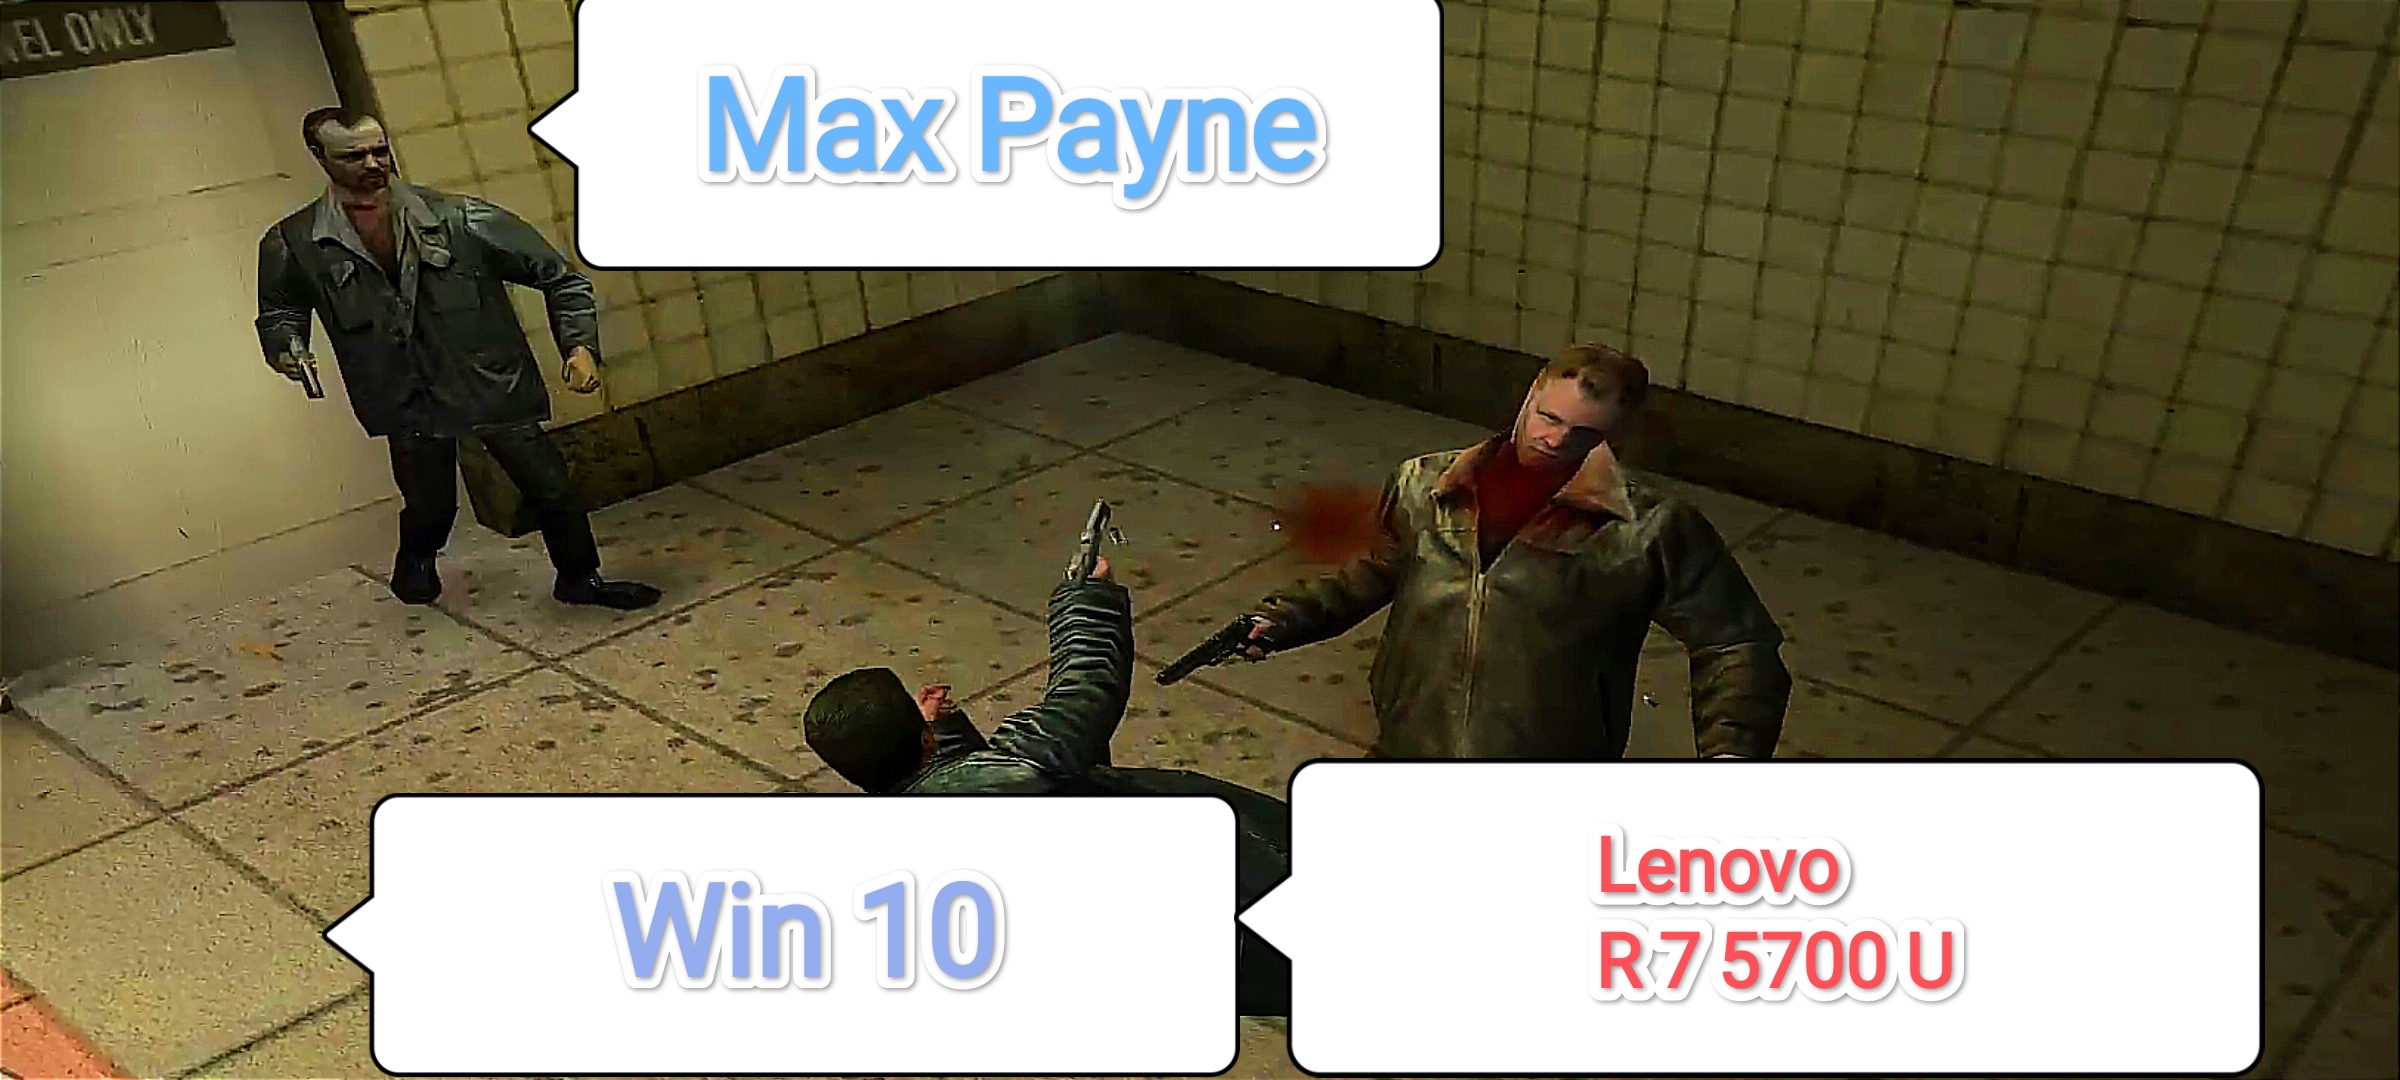 Max Payne v1.05 - настройки графики для 60 фпс на слабом ПК (1920X1080/Lenovo R 7 5700 U)